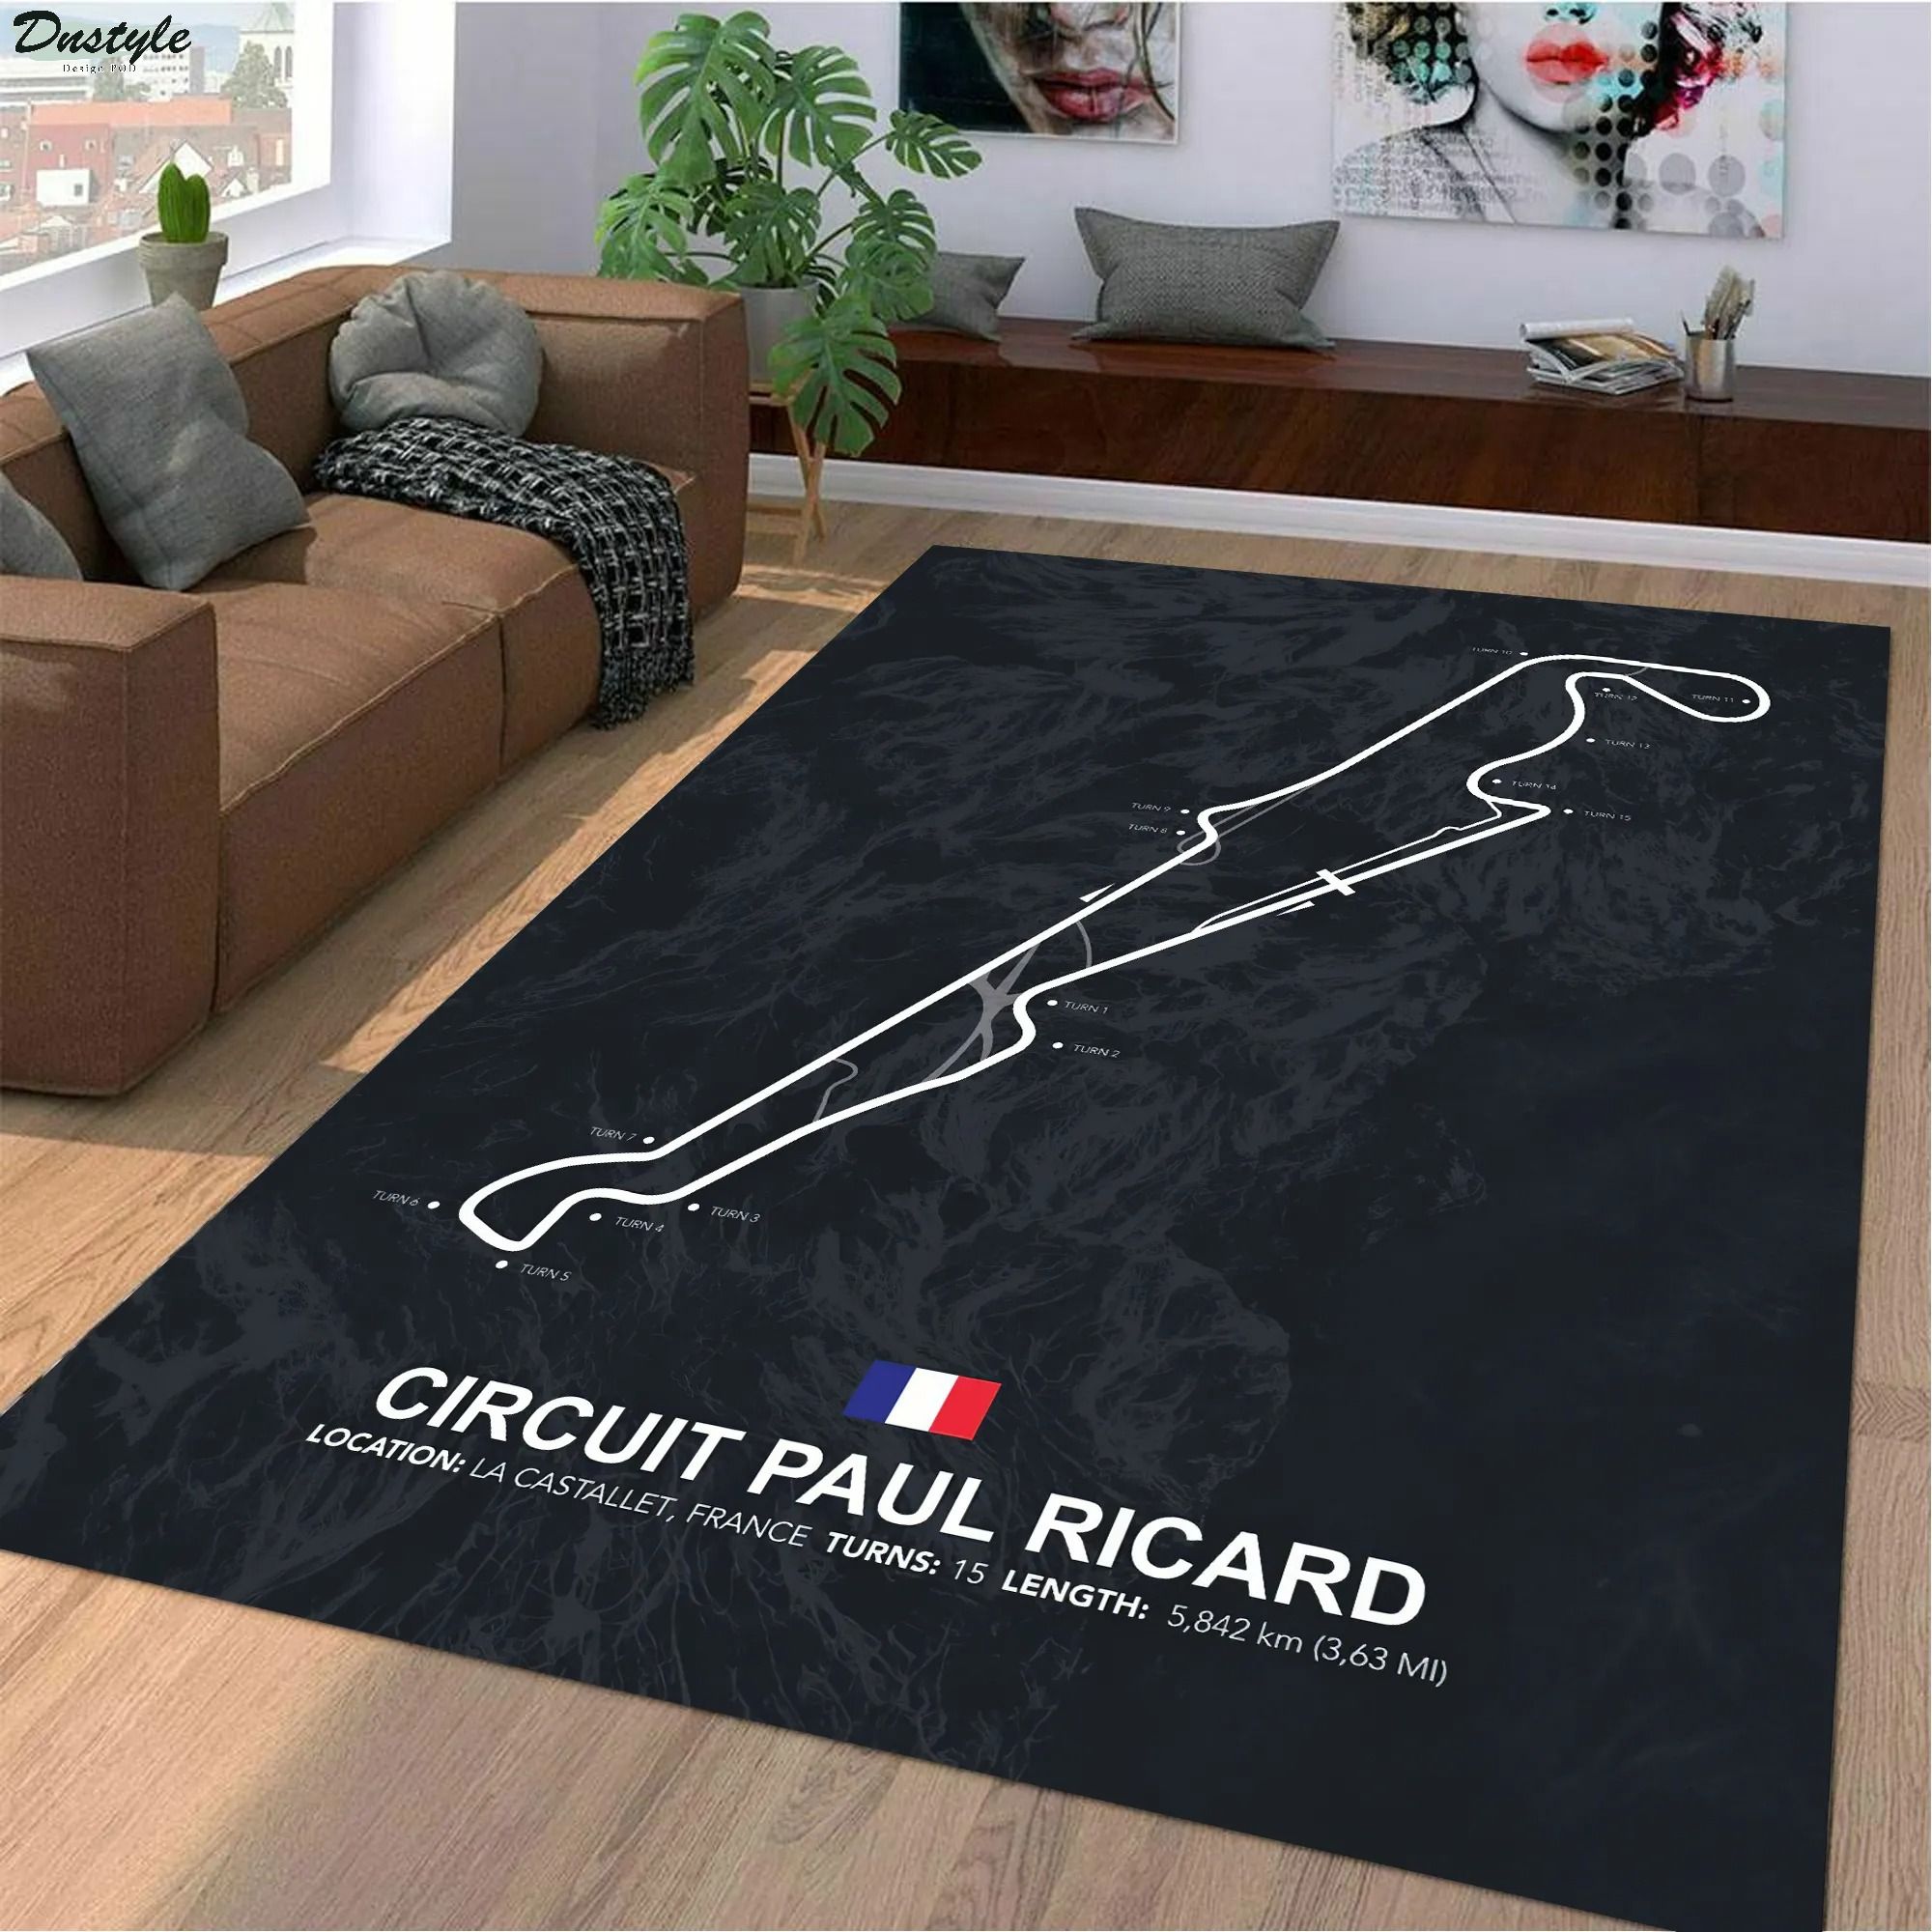 Circuit paul ricard f1 track rug